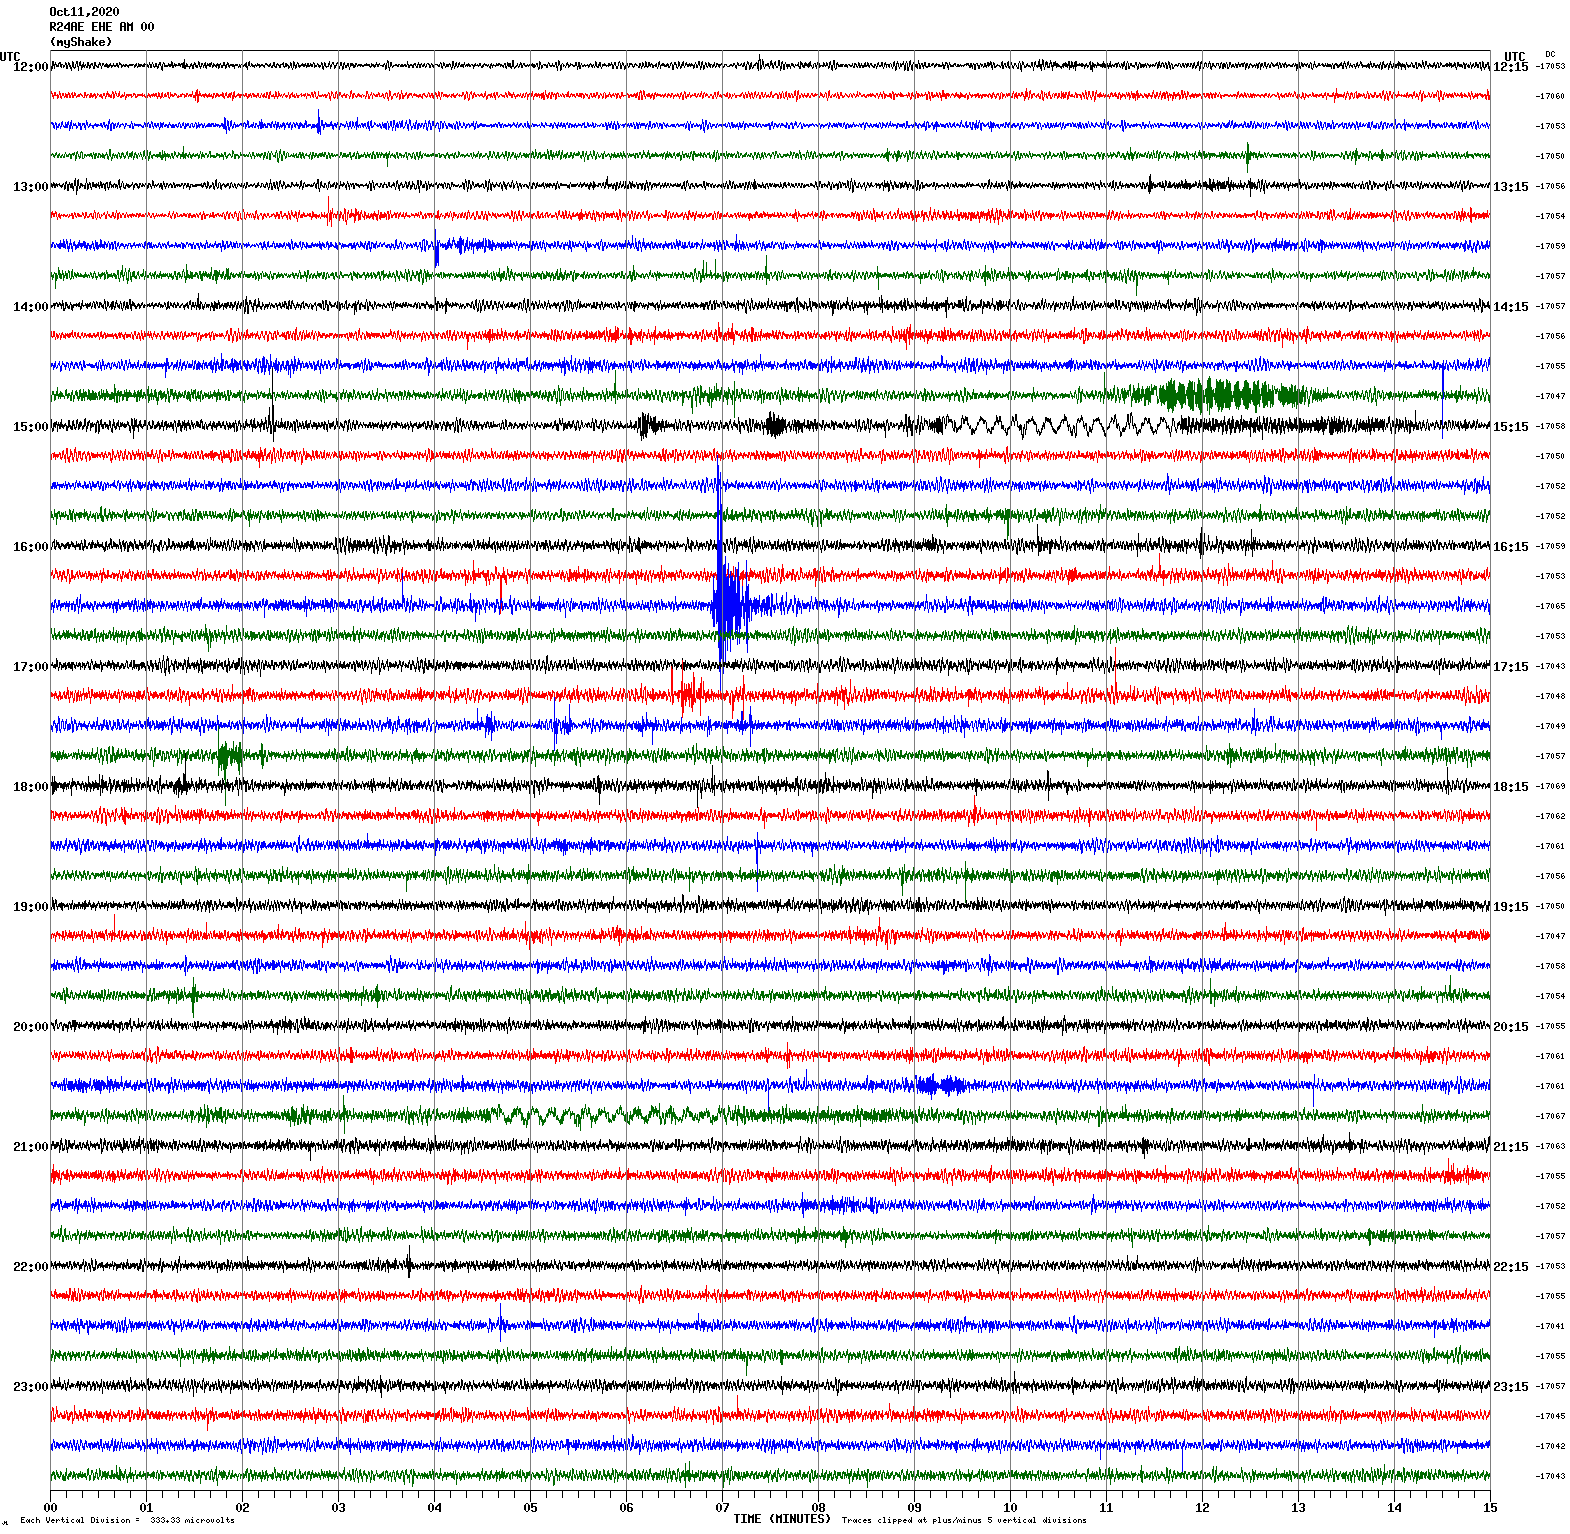 /seismic-data/R24AE/R24AE_EHE_AM_00.2020101112.gif